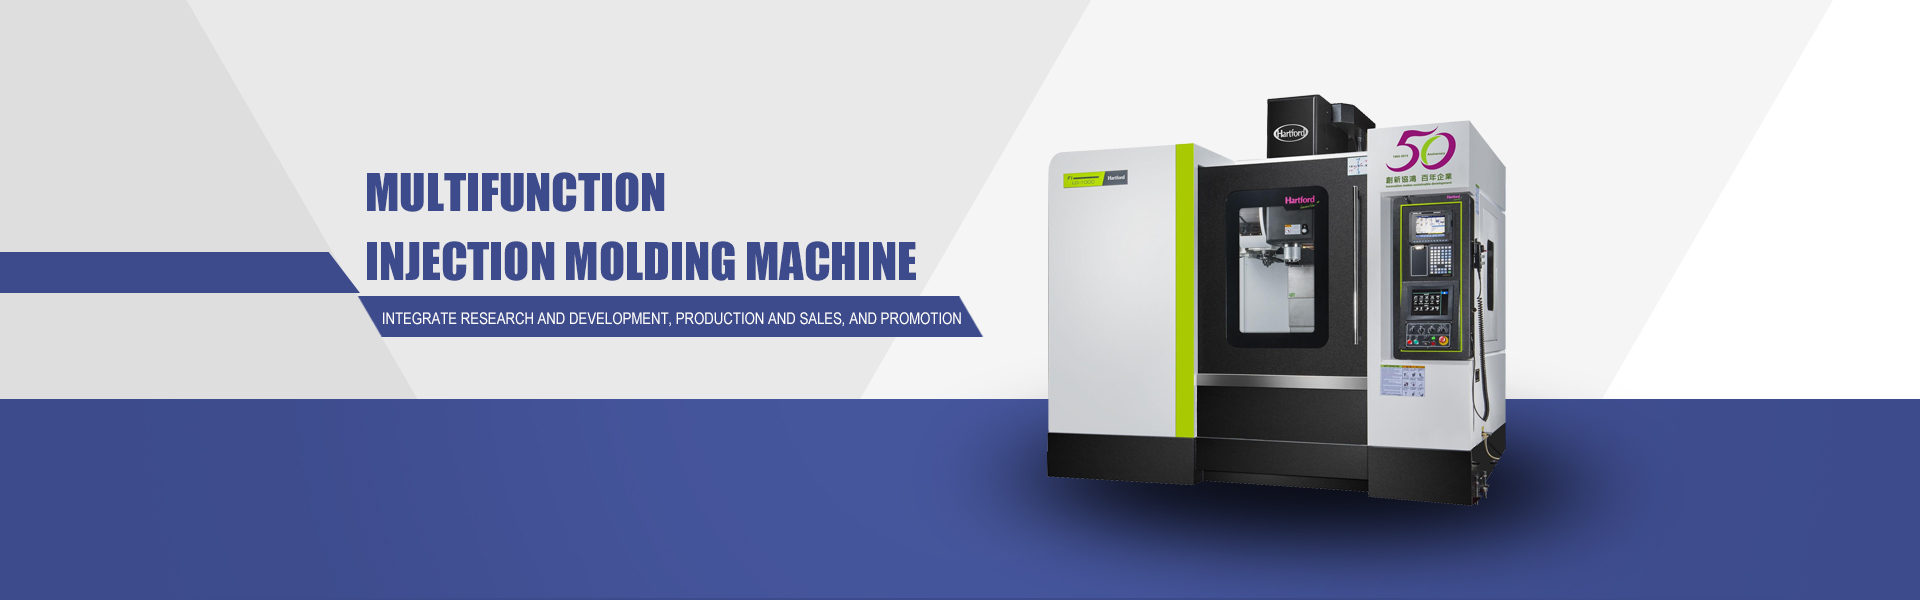 produzione di stampaggio a iniezione, progettazione di stampi, vendita di macchine per stampaggio a iniezione,Dongguan Haiteng Precision Machinery Co., Ltd.